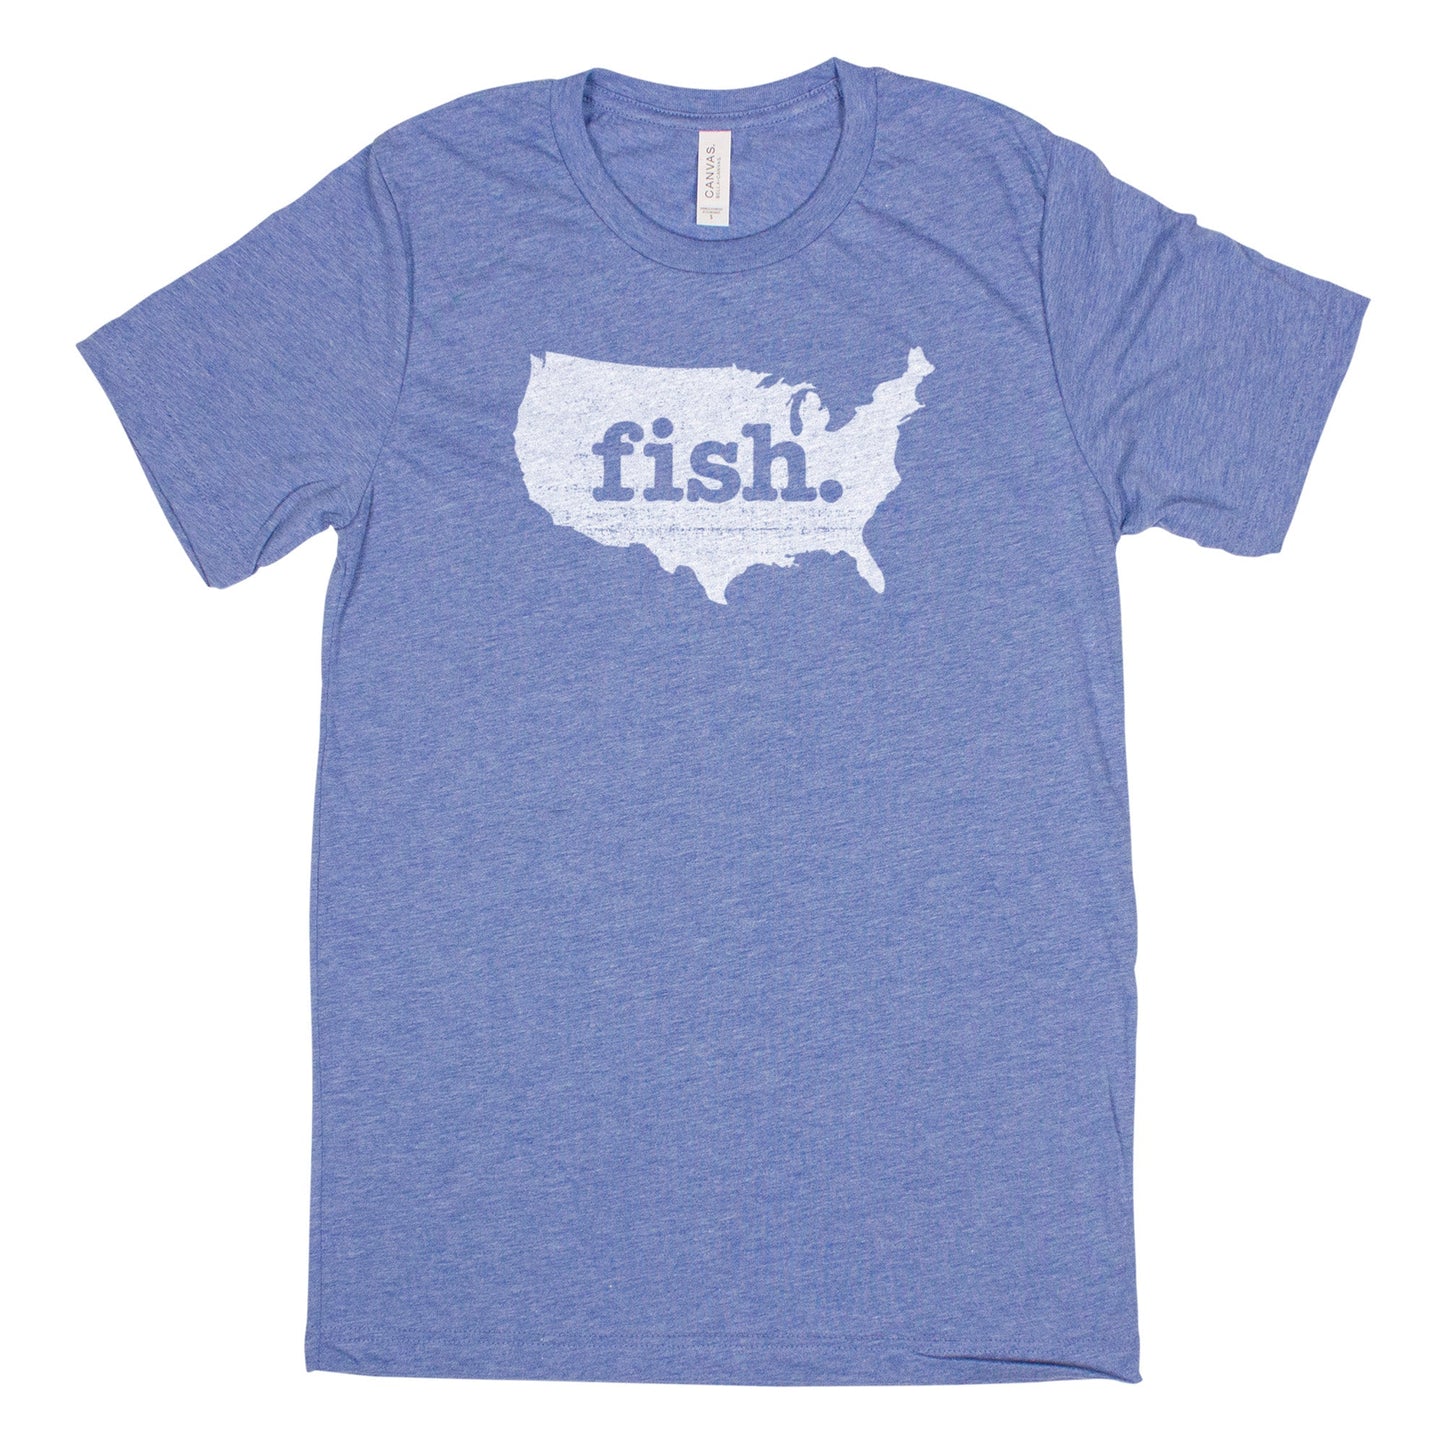 fish. Men's Unisex T-Shirt - US